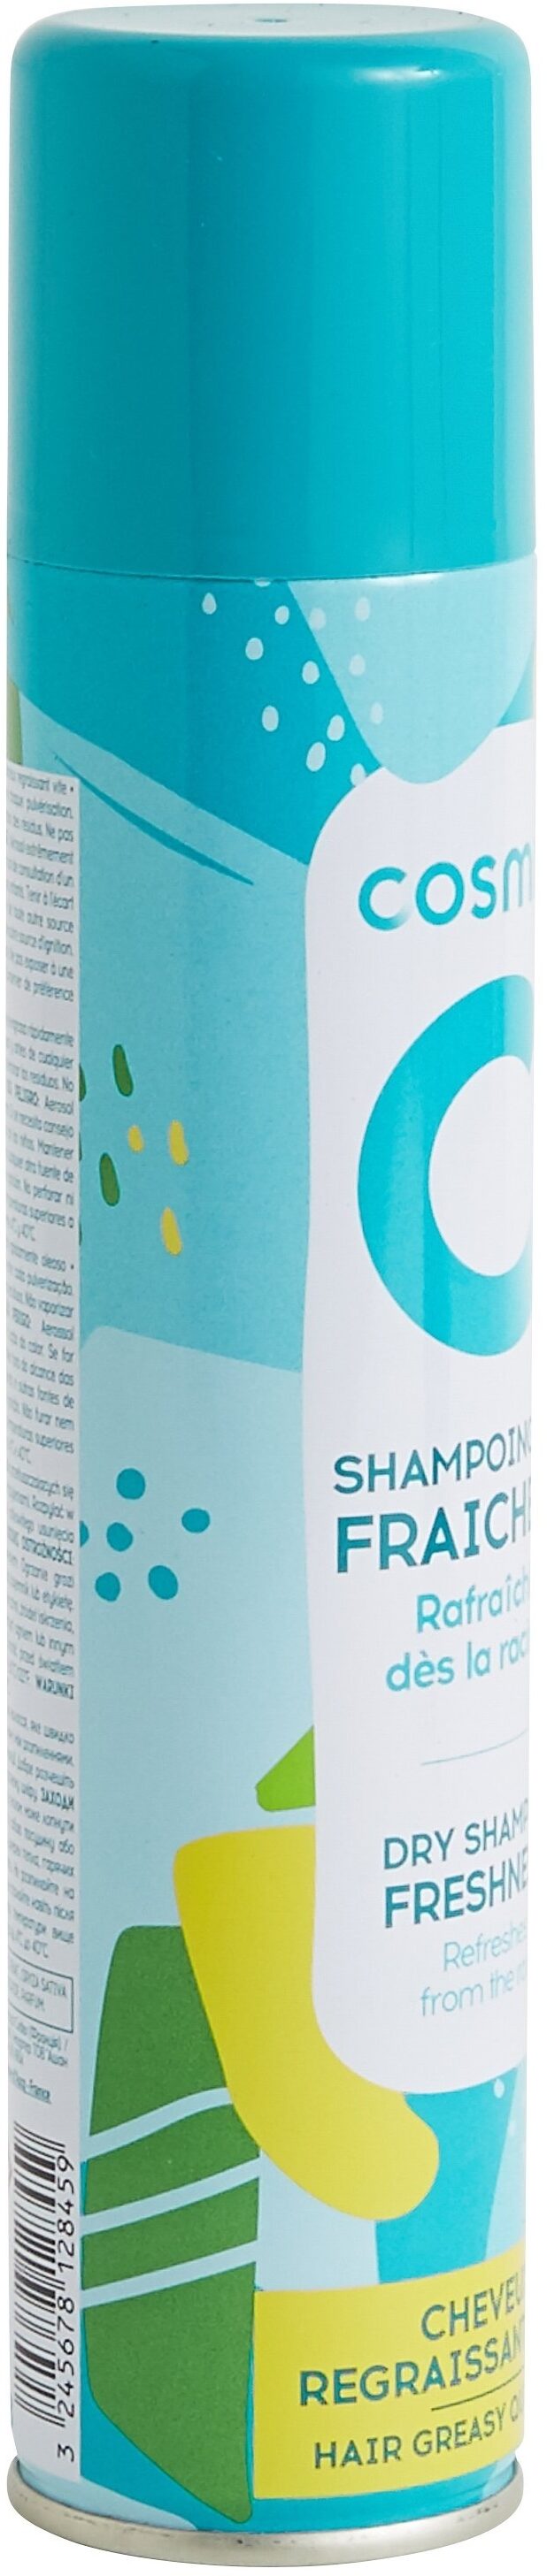 Cosmia - shampoing sec - fraicheur - 200 ml / volume nominal 270ml ? - Product - en